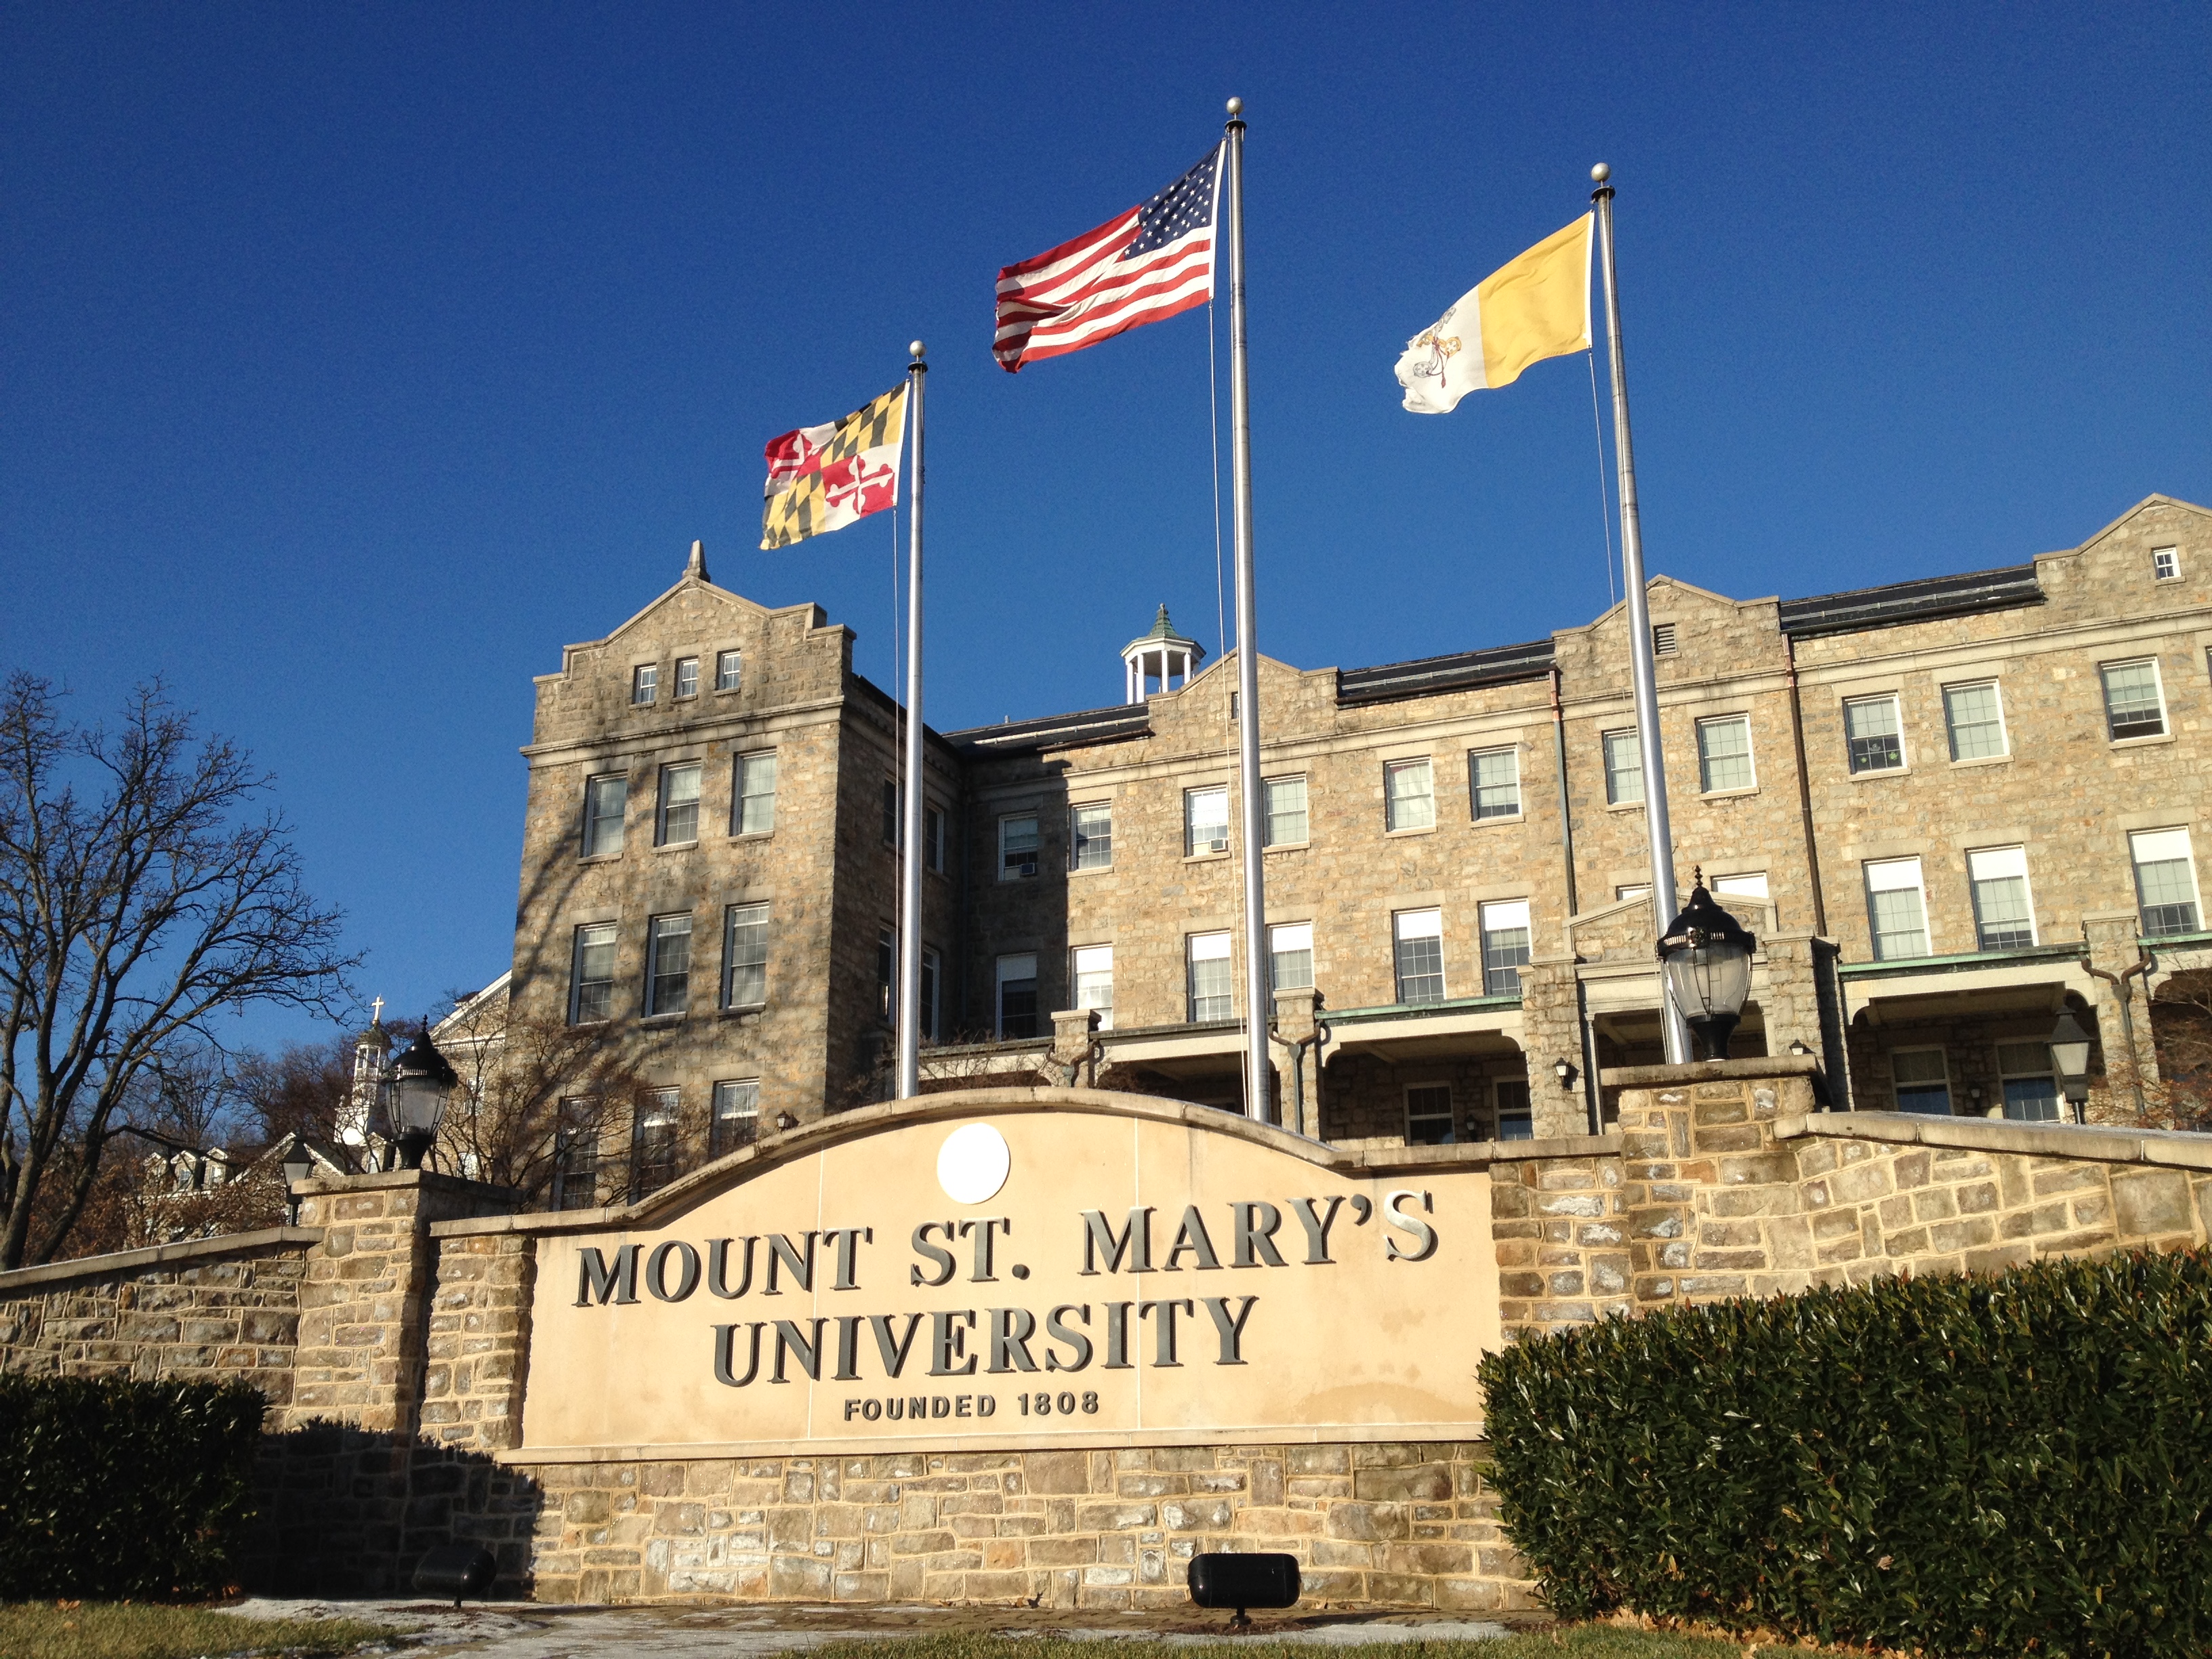 Mount St. Mary's University - the second oldest Catholic university in the nation